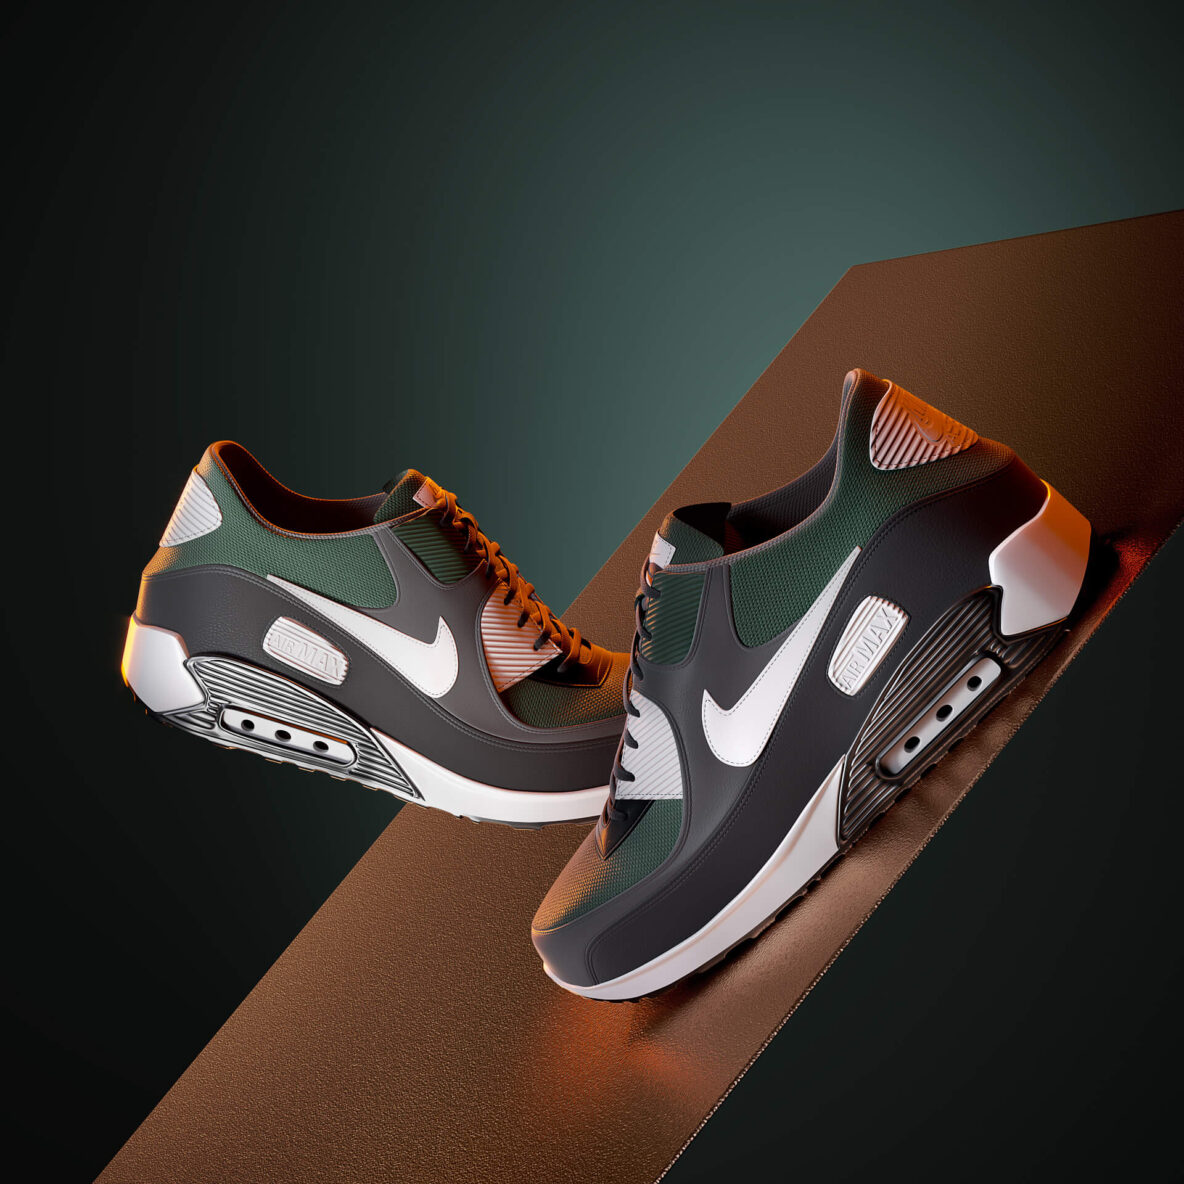 3D Models of a Pair of Sneakers